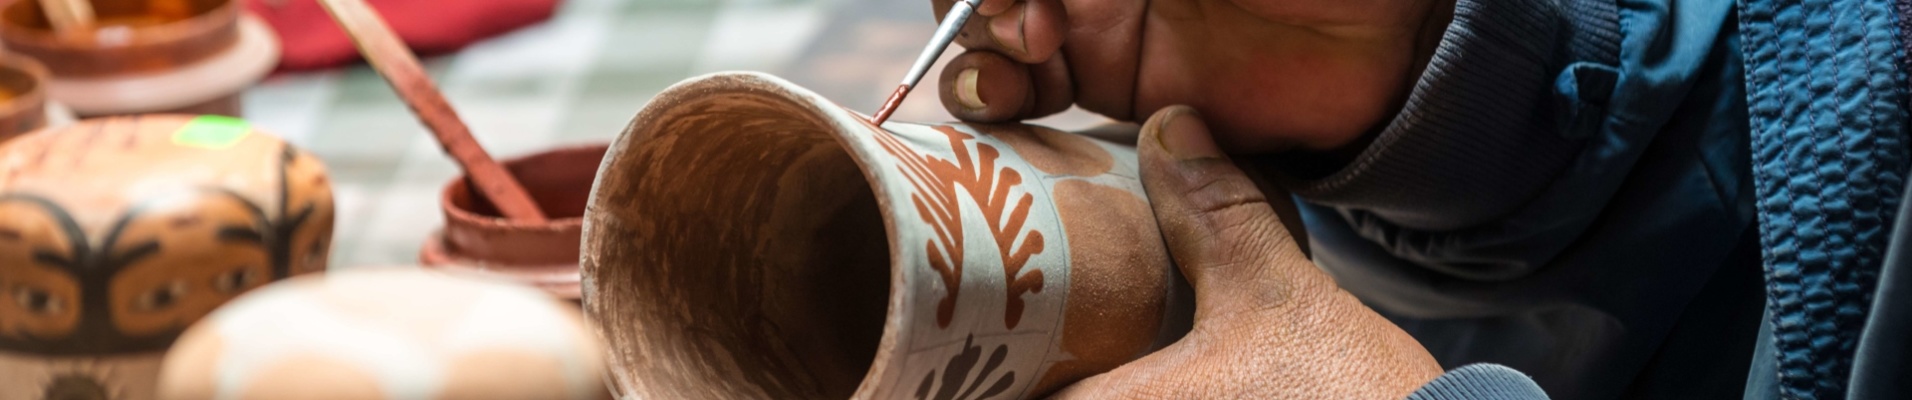 Péruvien artisan peintre, poterie, Pérou